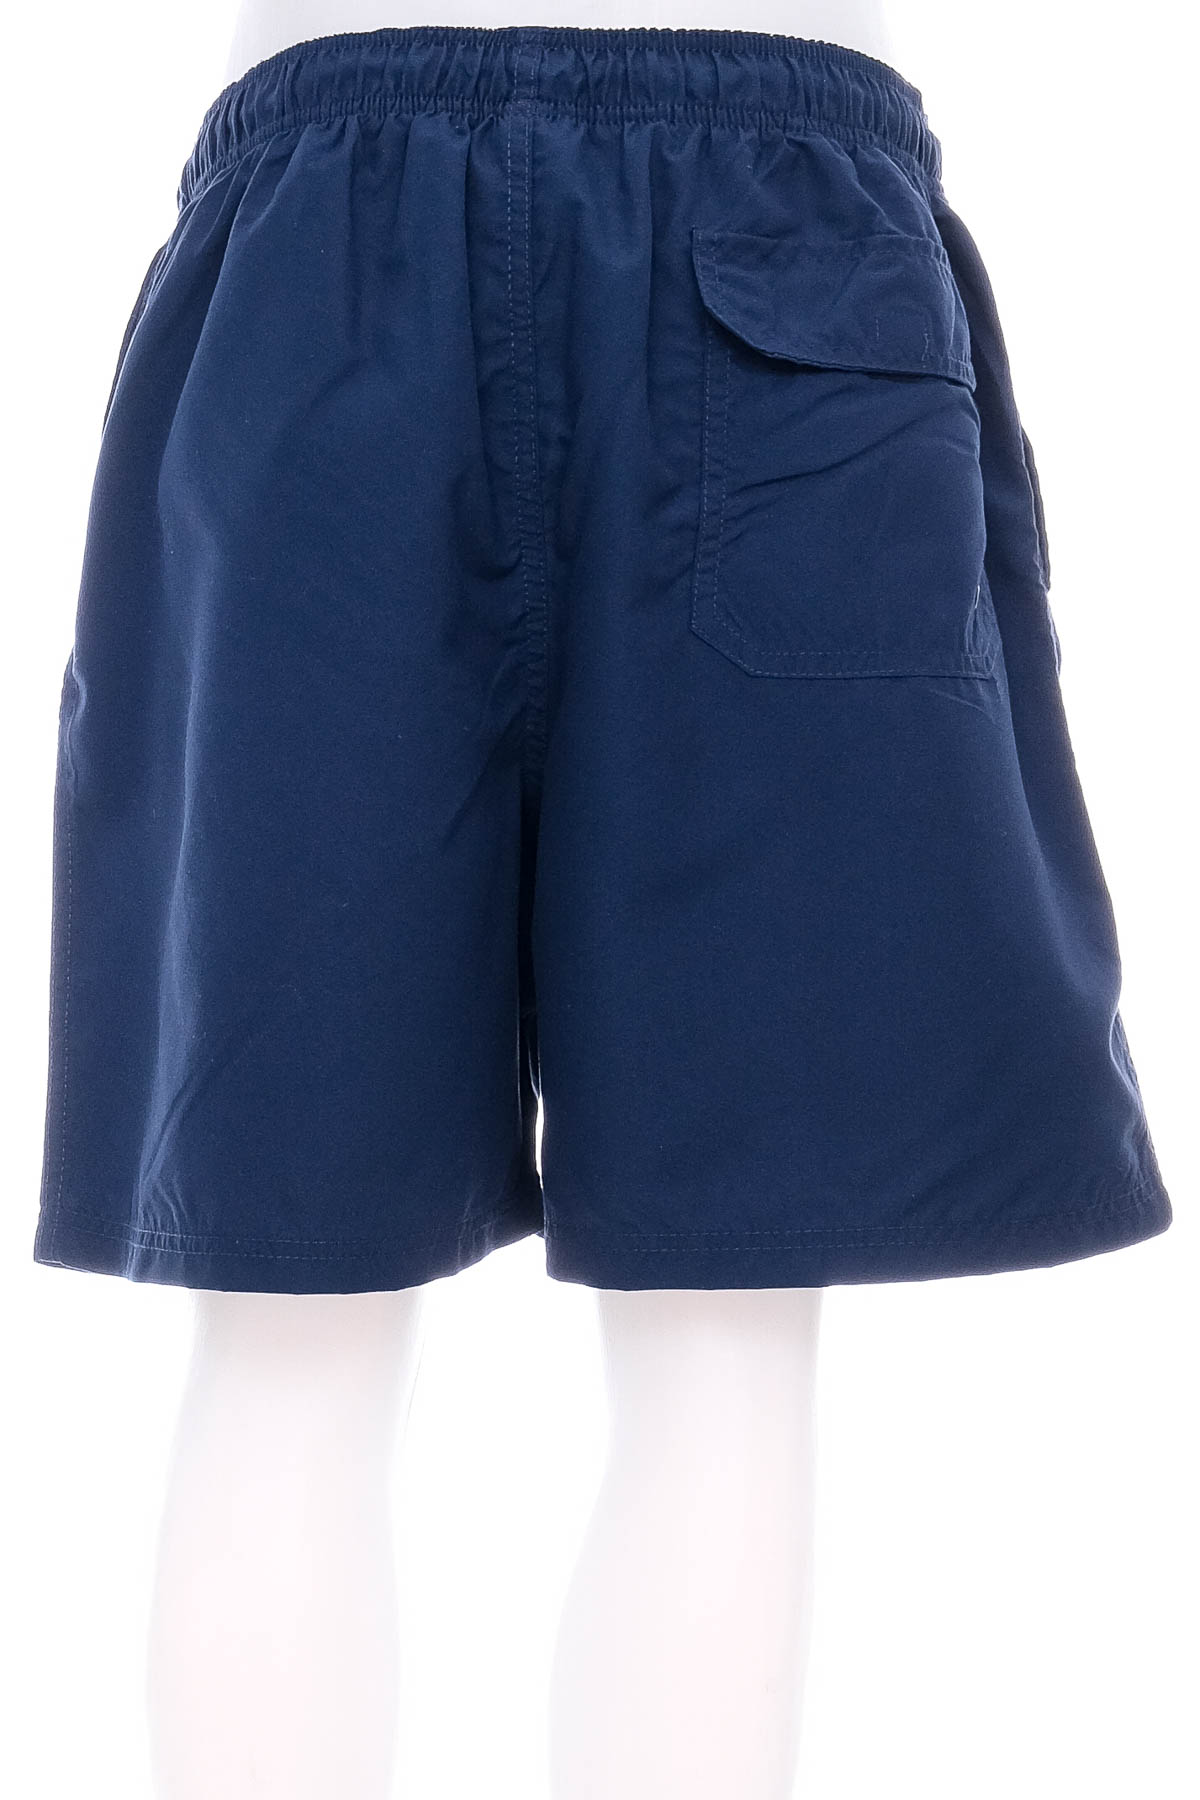 Men's shorts - Royal County of Berkshire POLO CLUB - 1